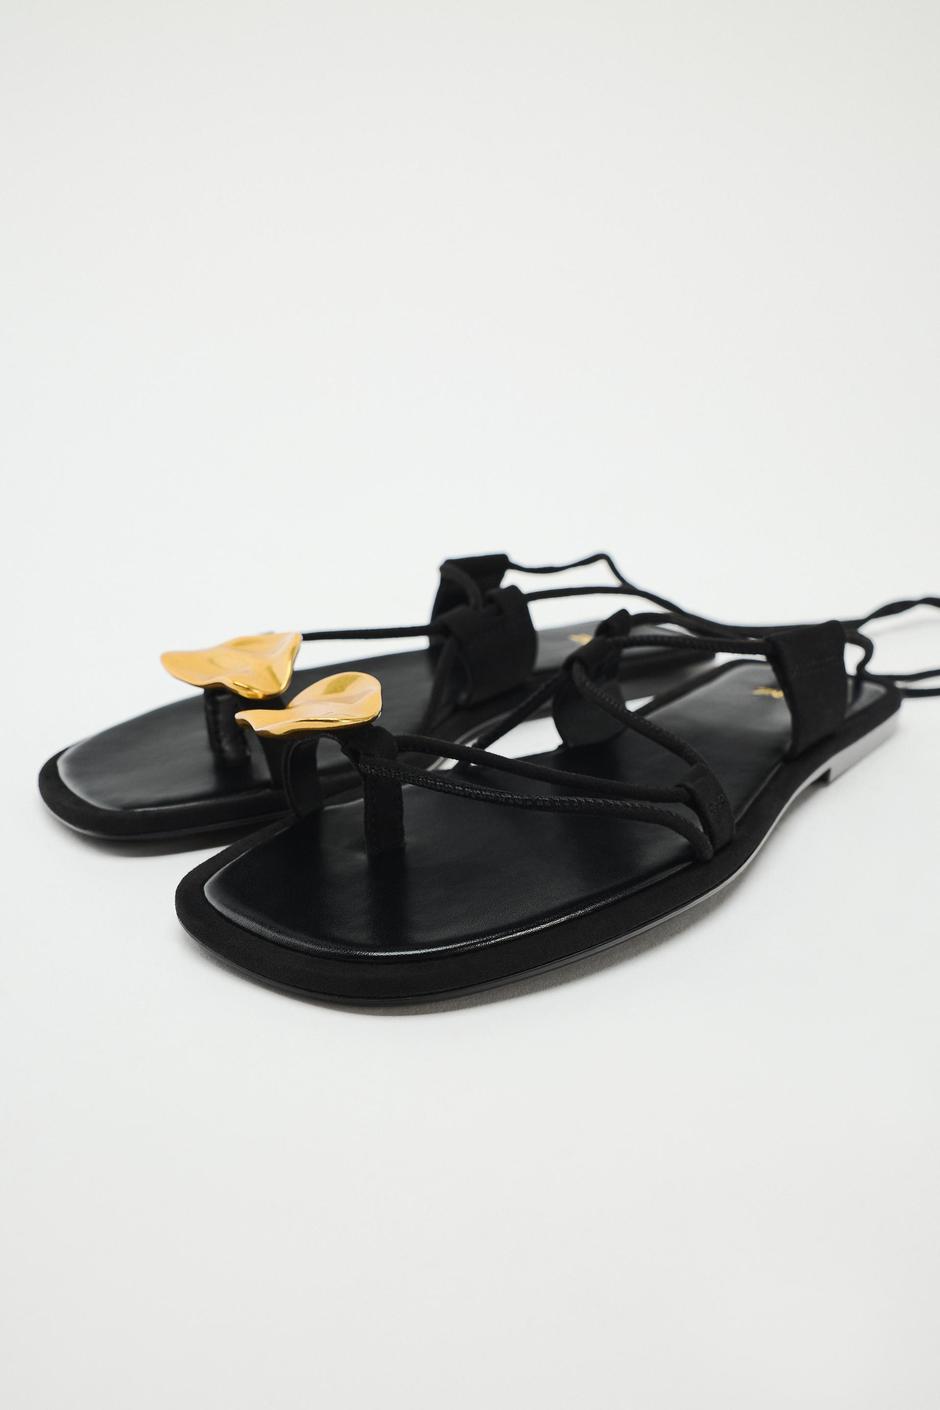 Foto: Zara, gladijatorske sandale (49,95 eura) | Autor: 